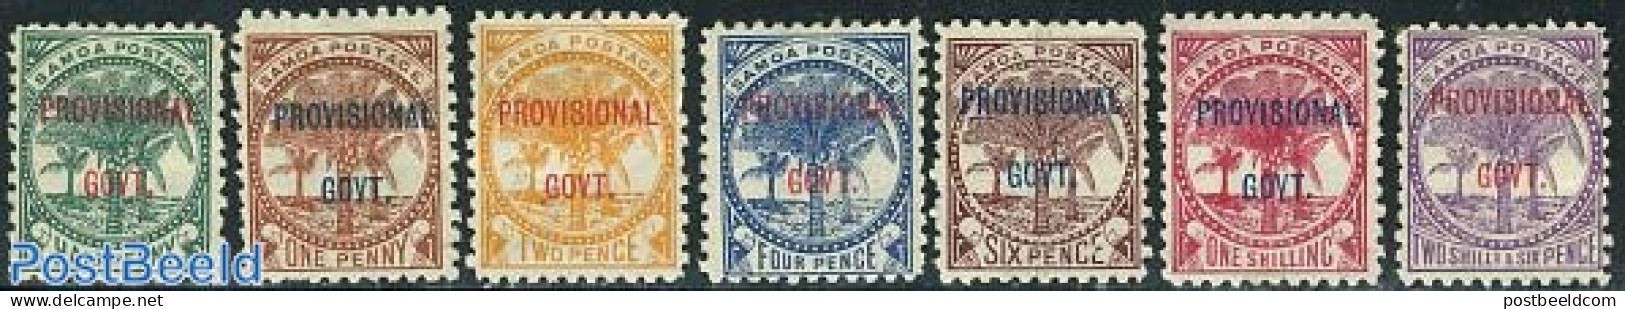 Samoa 1899 PROVISIONAL GOVT. Overprints 7v, Unused (hinged) - Samoa